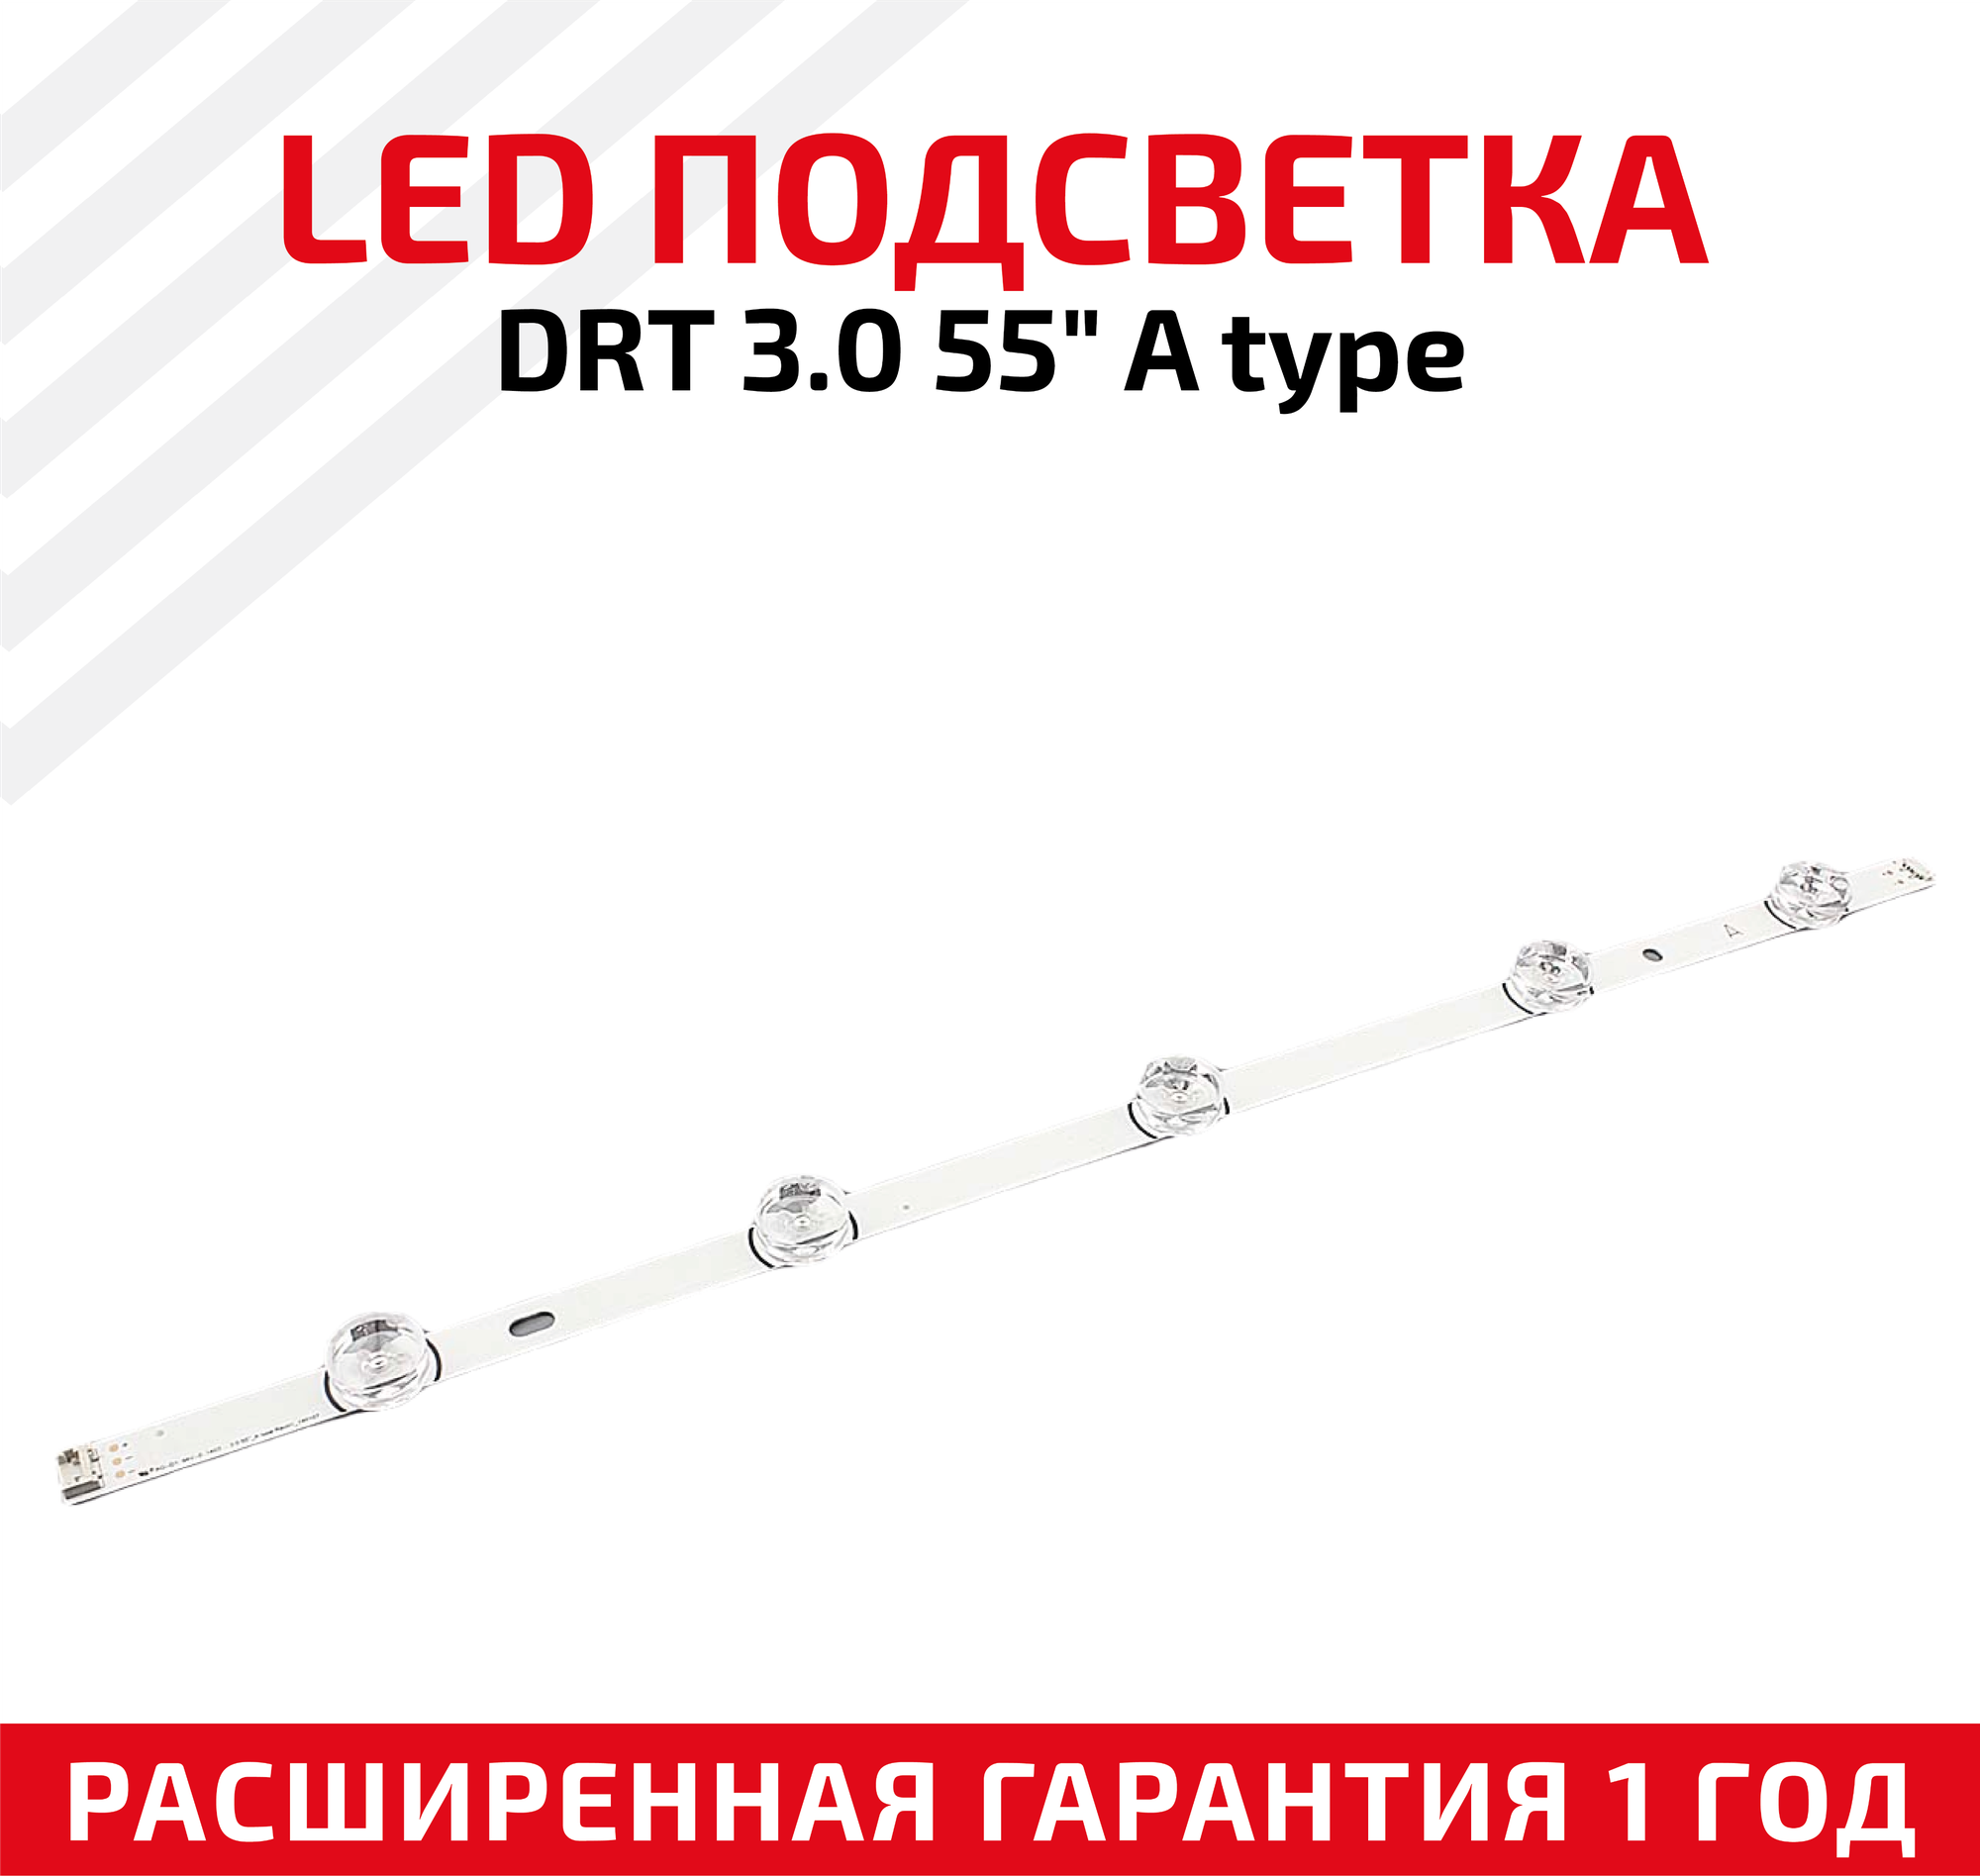 LED подсветка (светодиодная планка) для телевизора 3.0 55